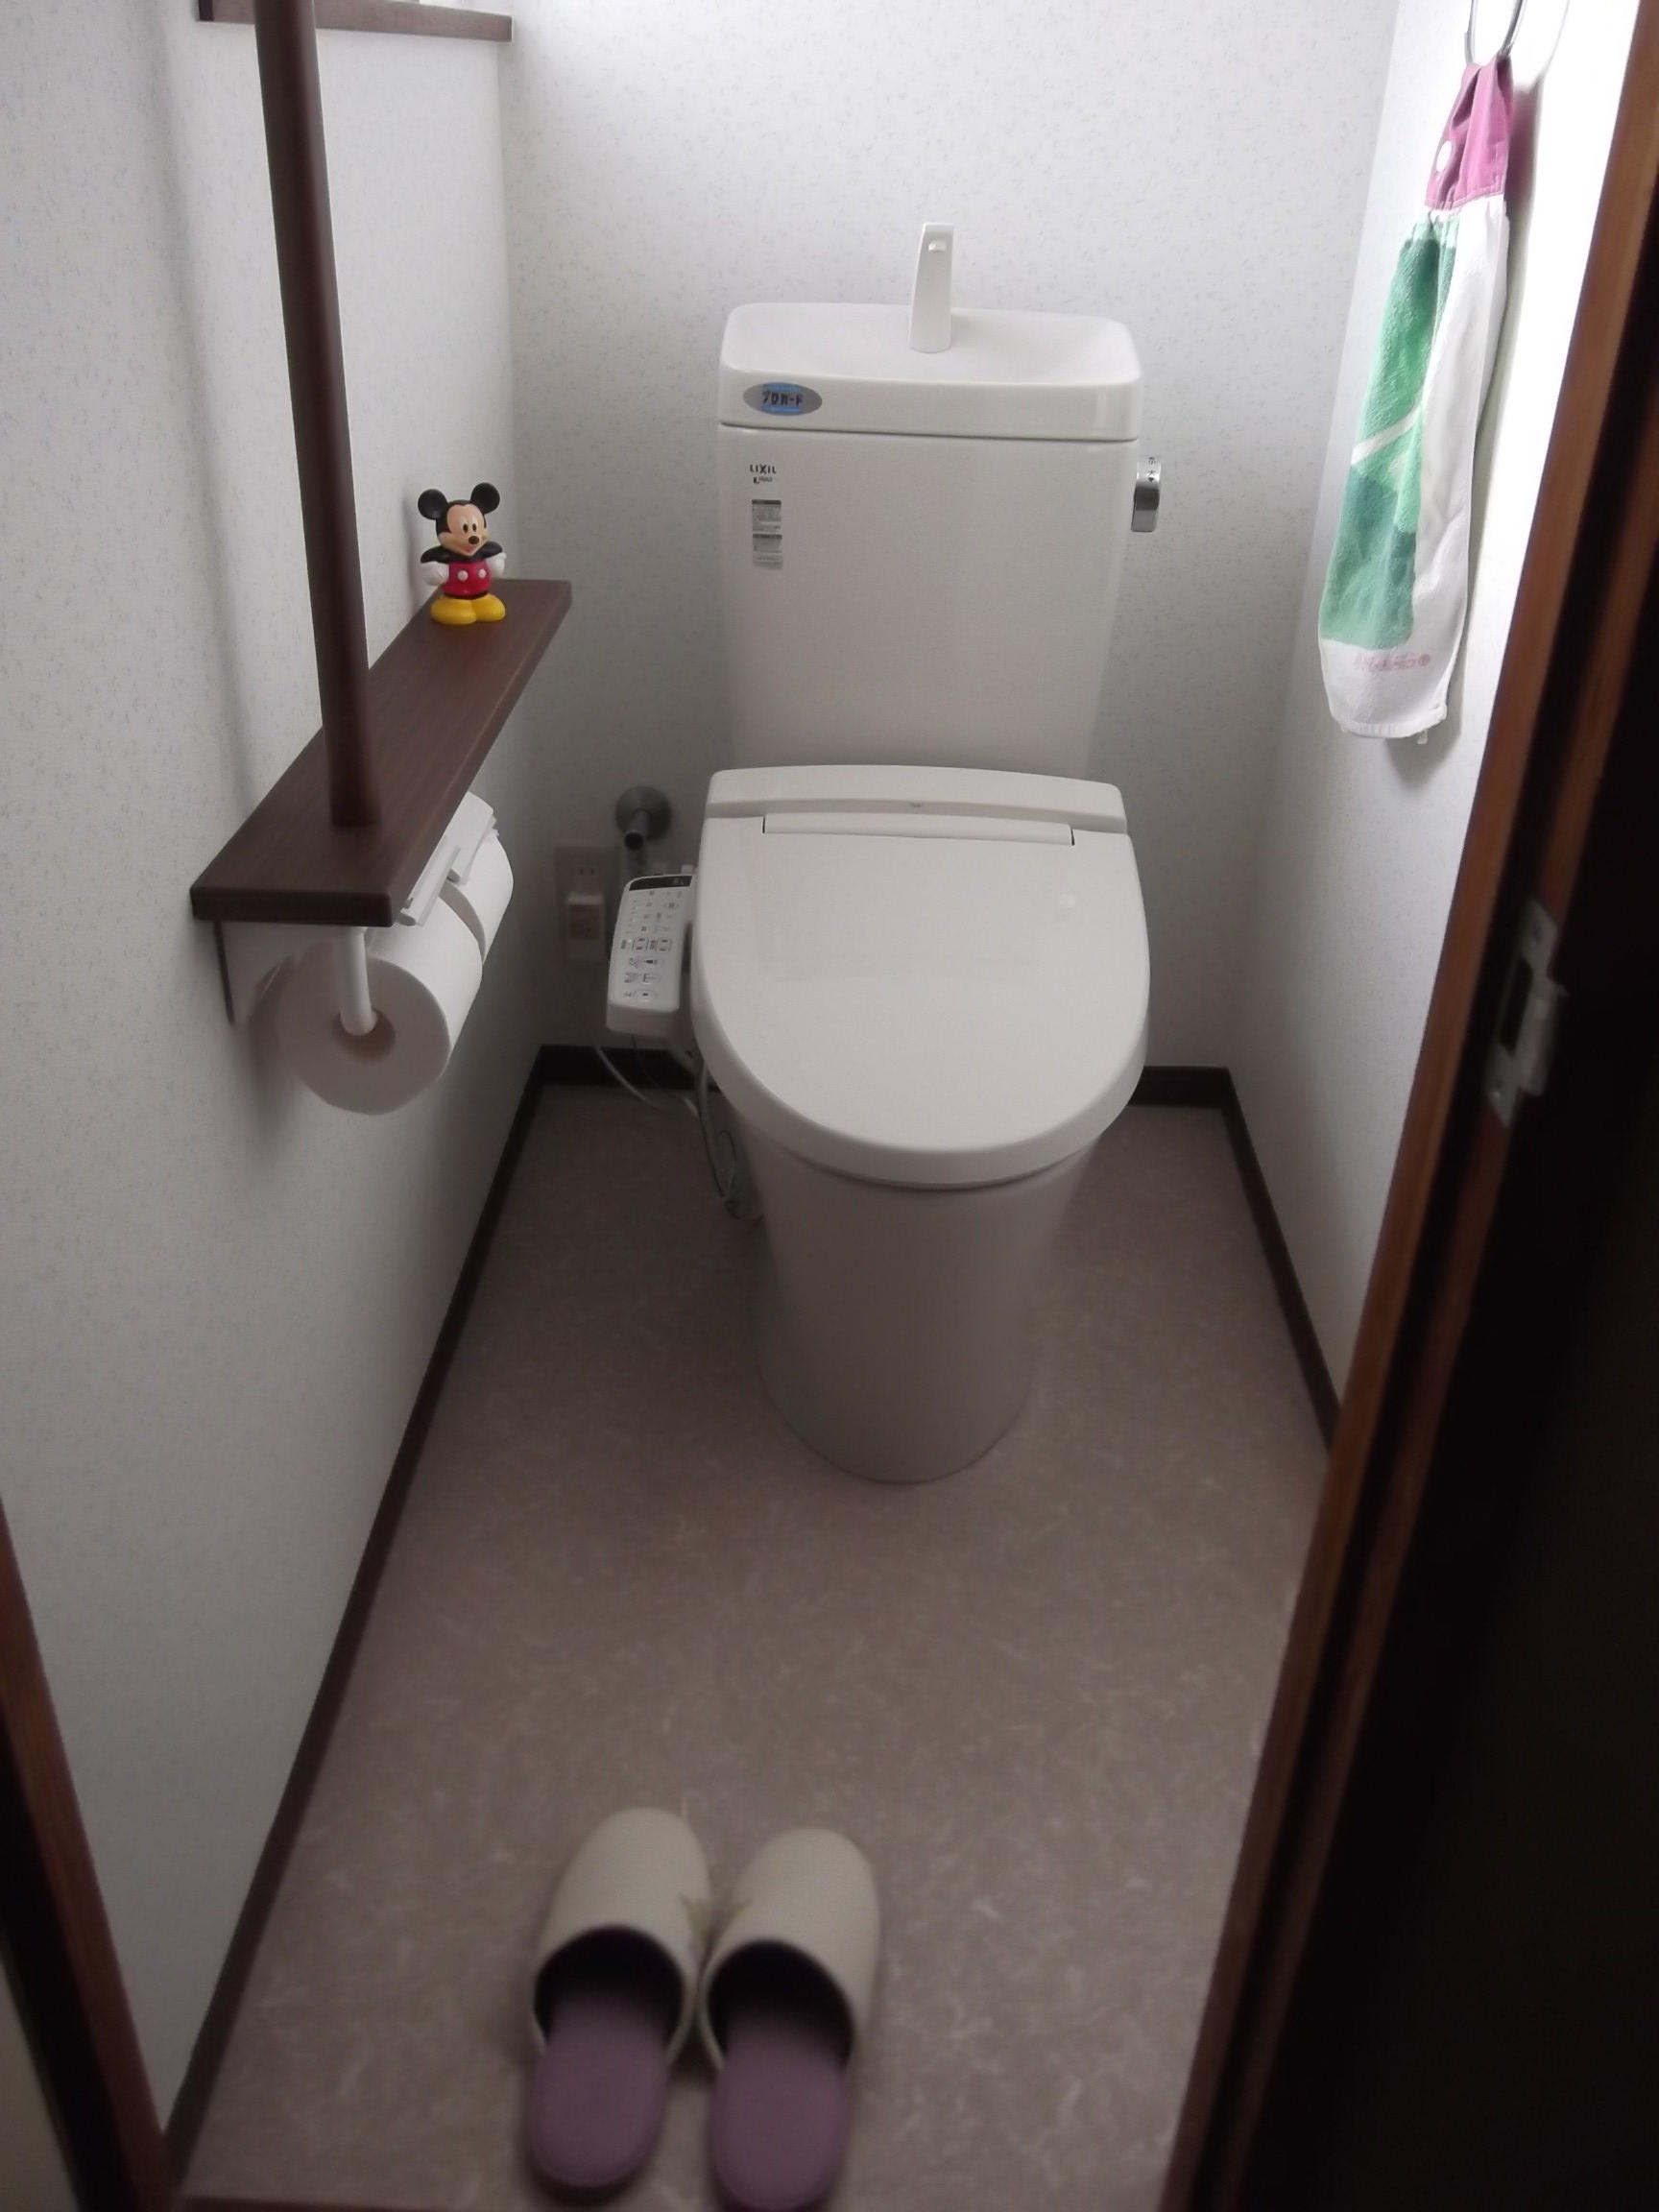 U様邸。和式トイレから洋式トイレへのリフォーム事例です。